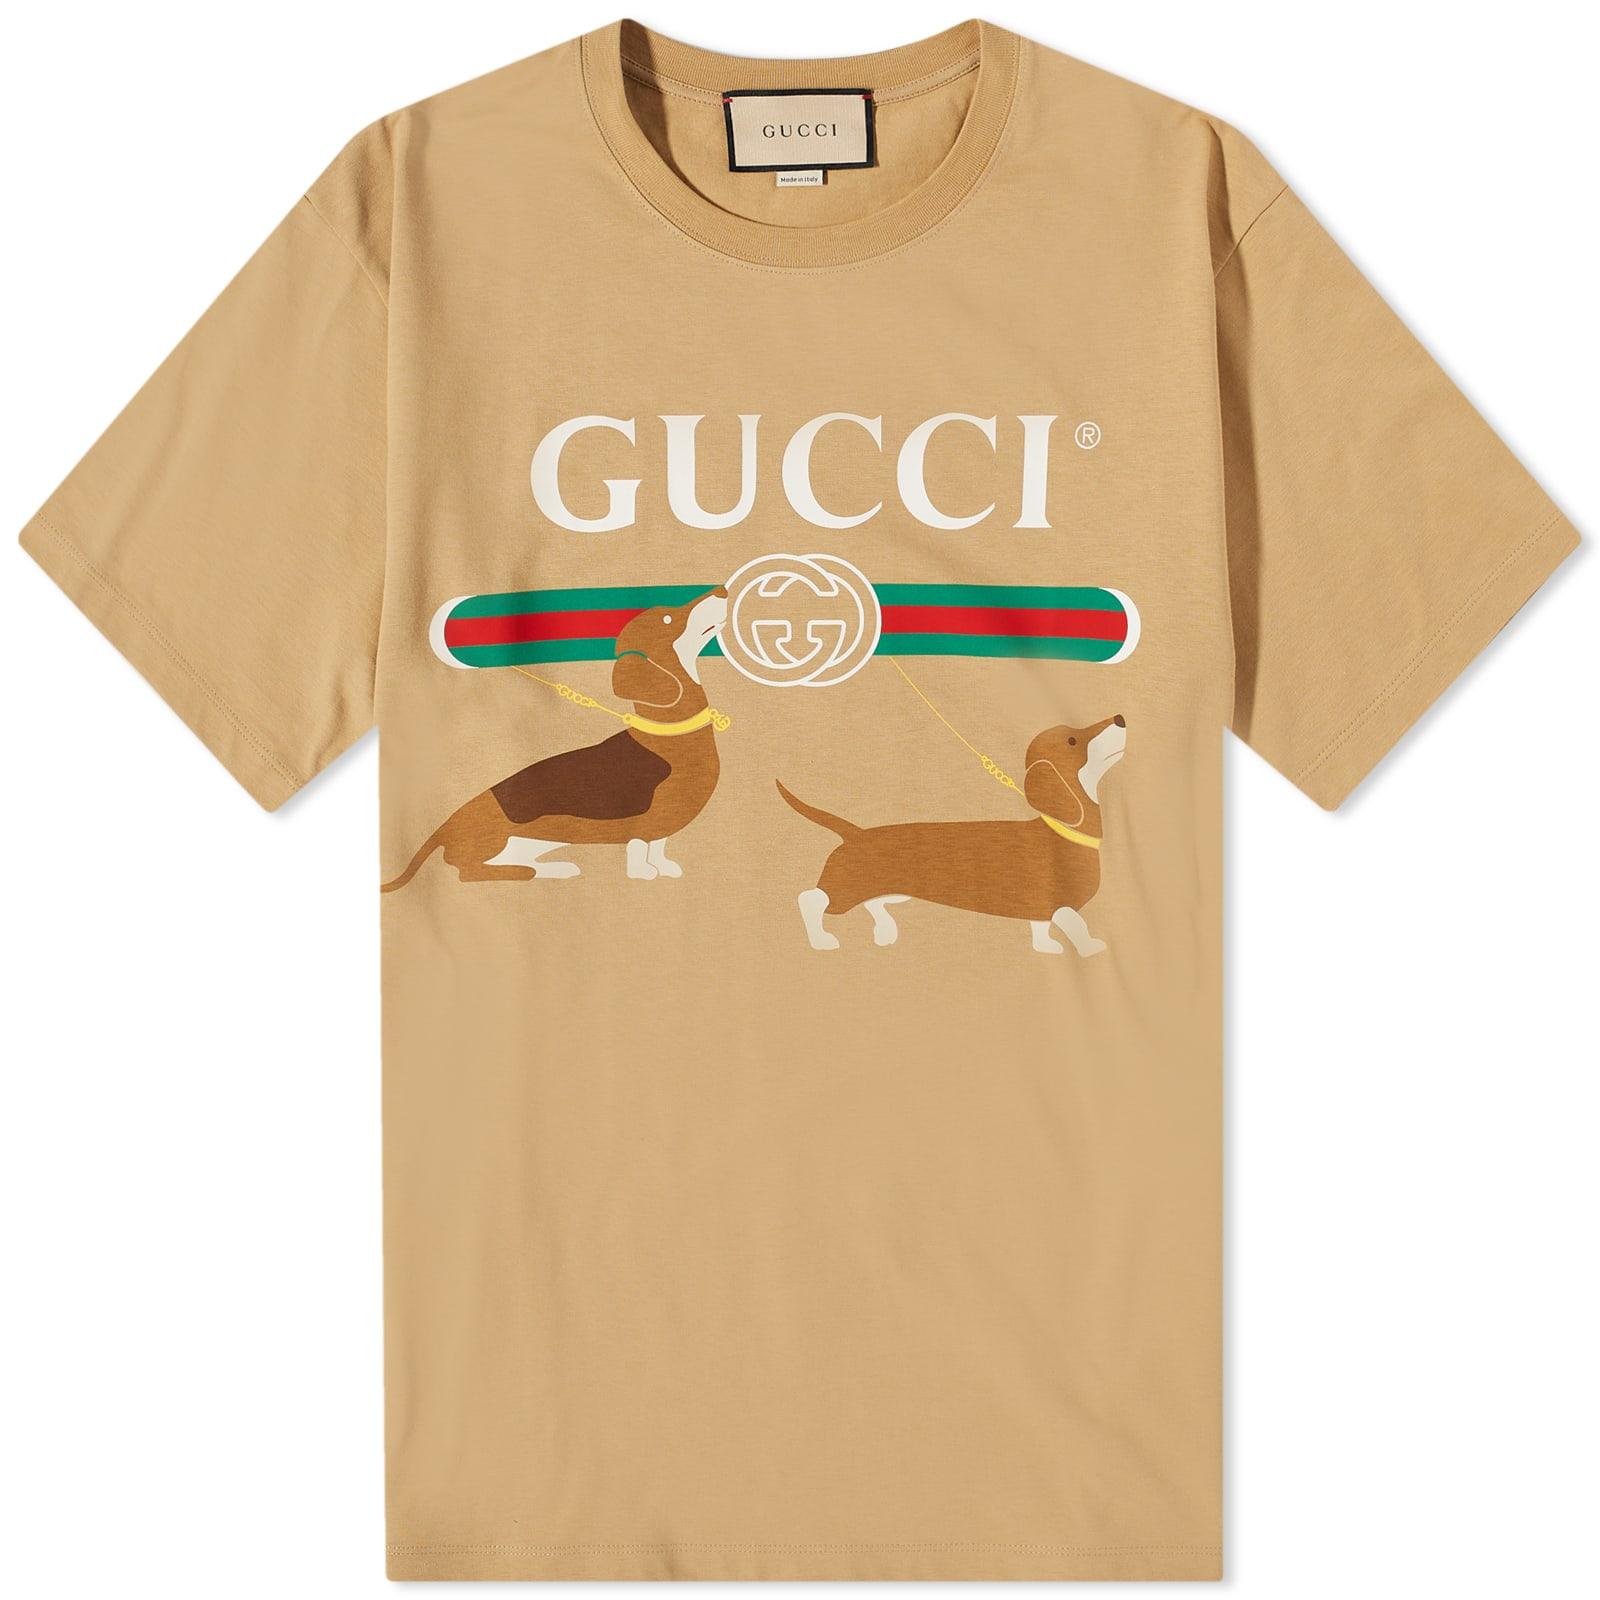 Gucci Designer Inspired Dog Shirt The Honest Dog